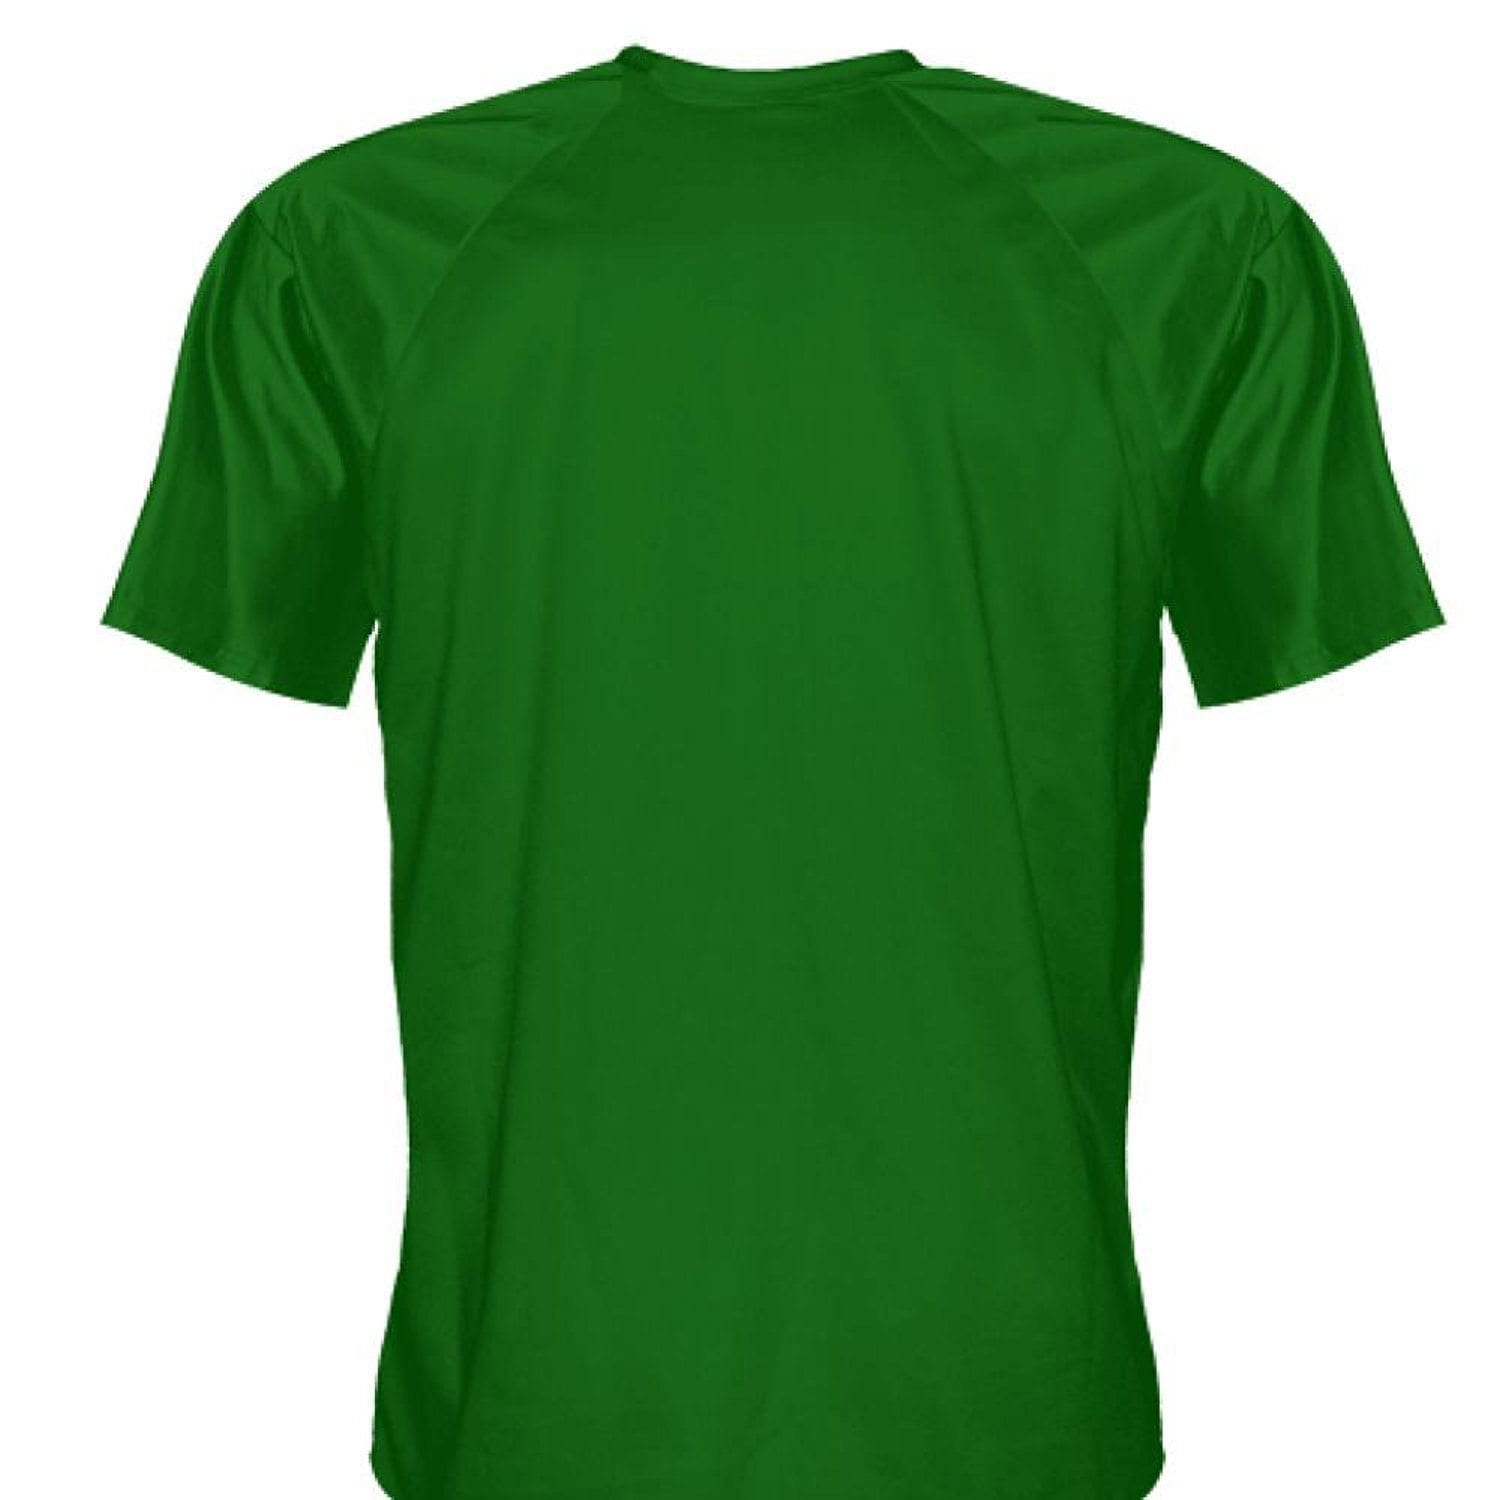 dark green soccer jersey